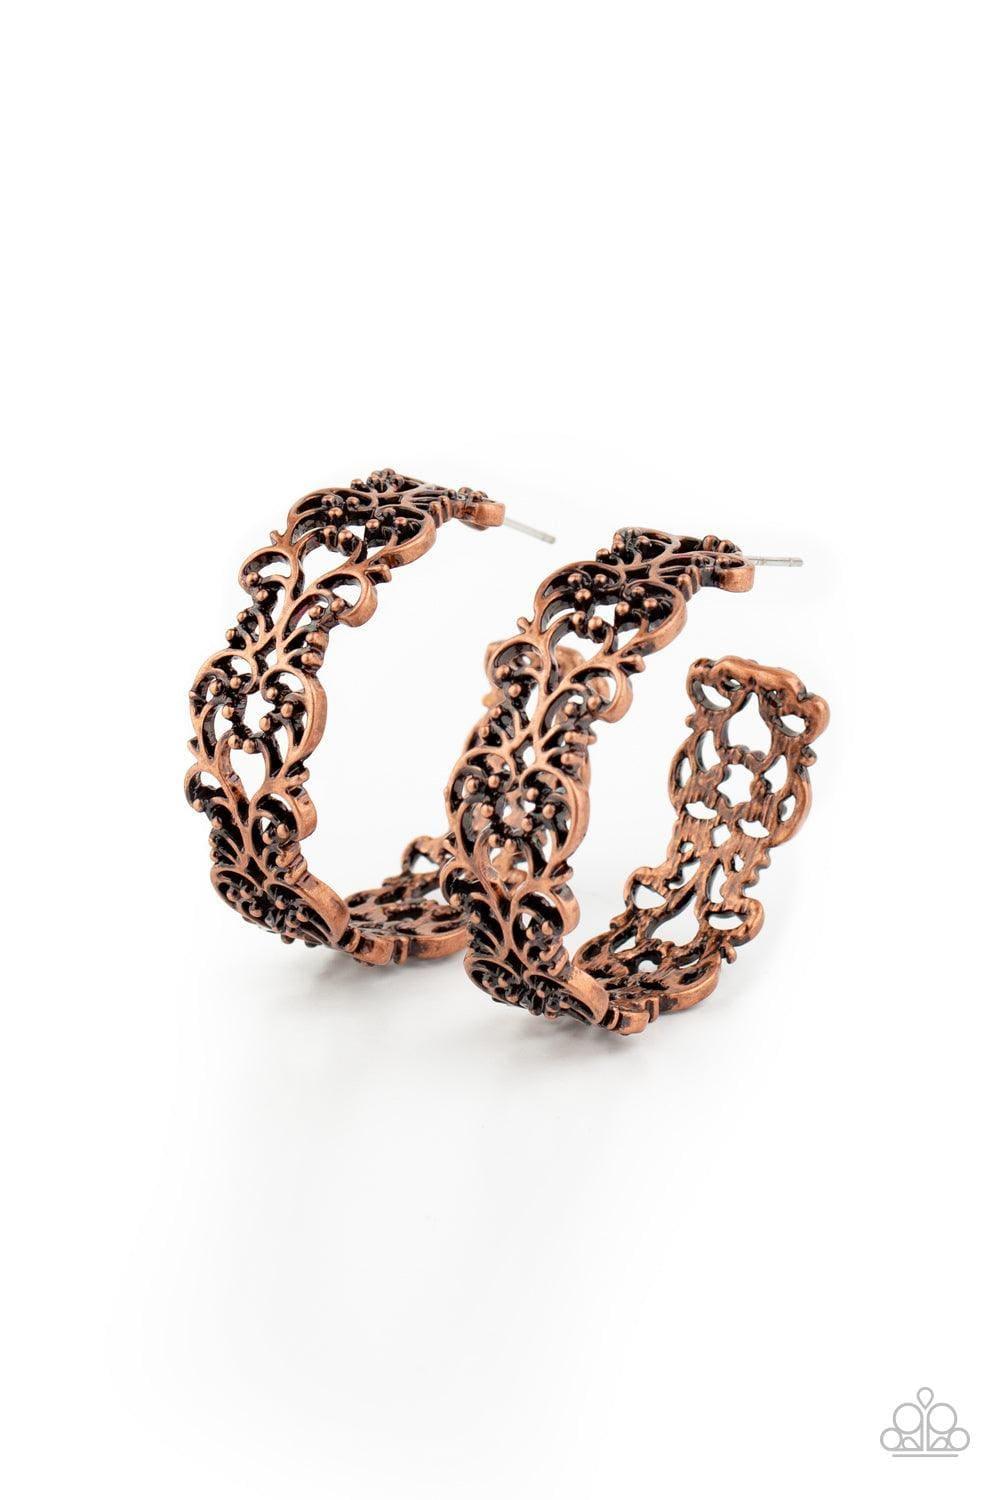 Paparazzi Accessories - Laurel Wreaths - Copper Hoop Earrings - Bling by JessieK